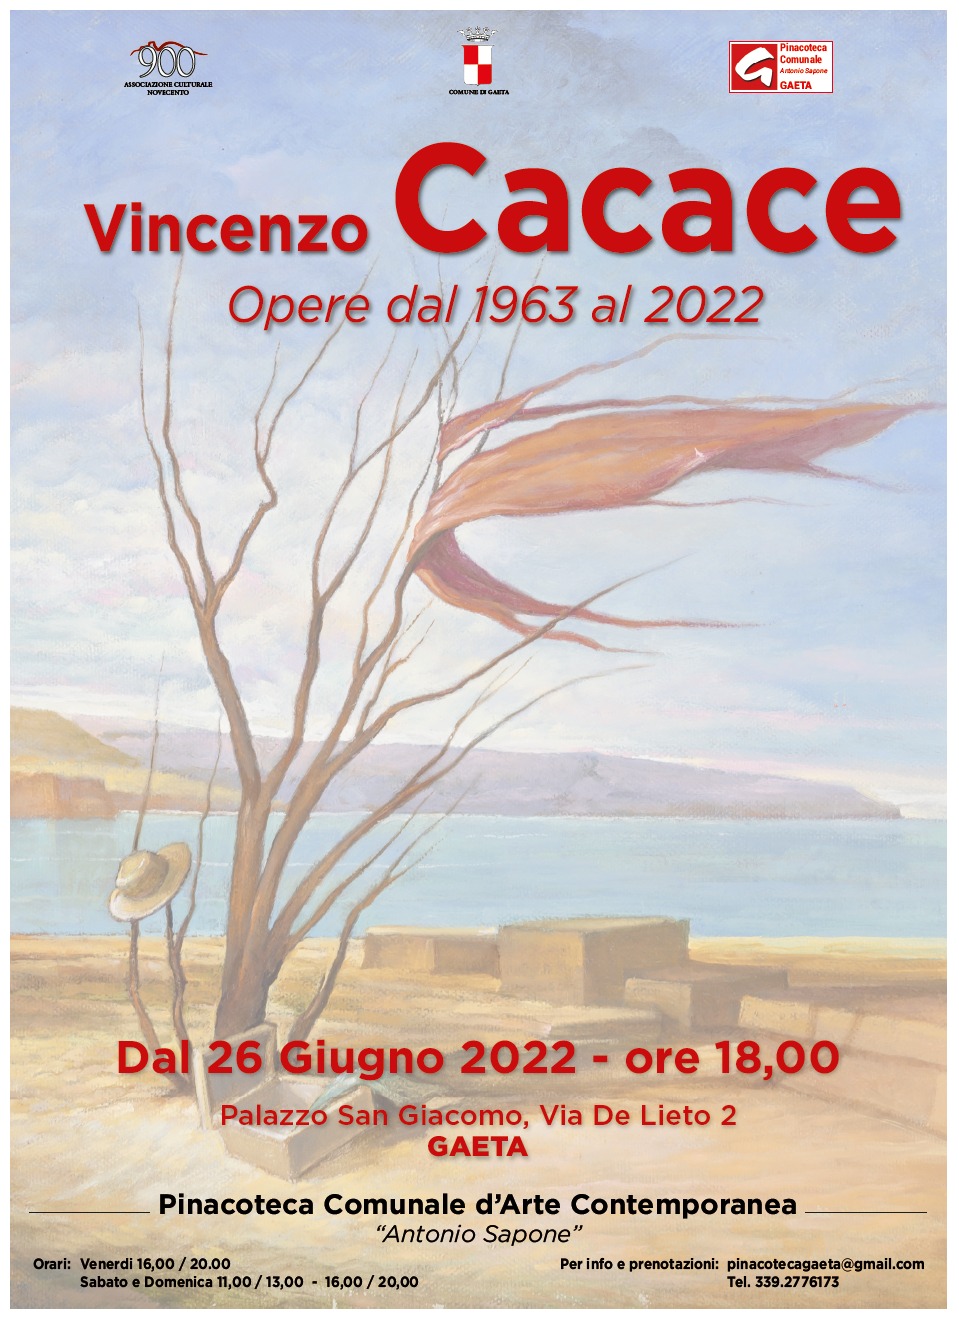 Vincenzo Cacace, la mostra in Pinacoteca